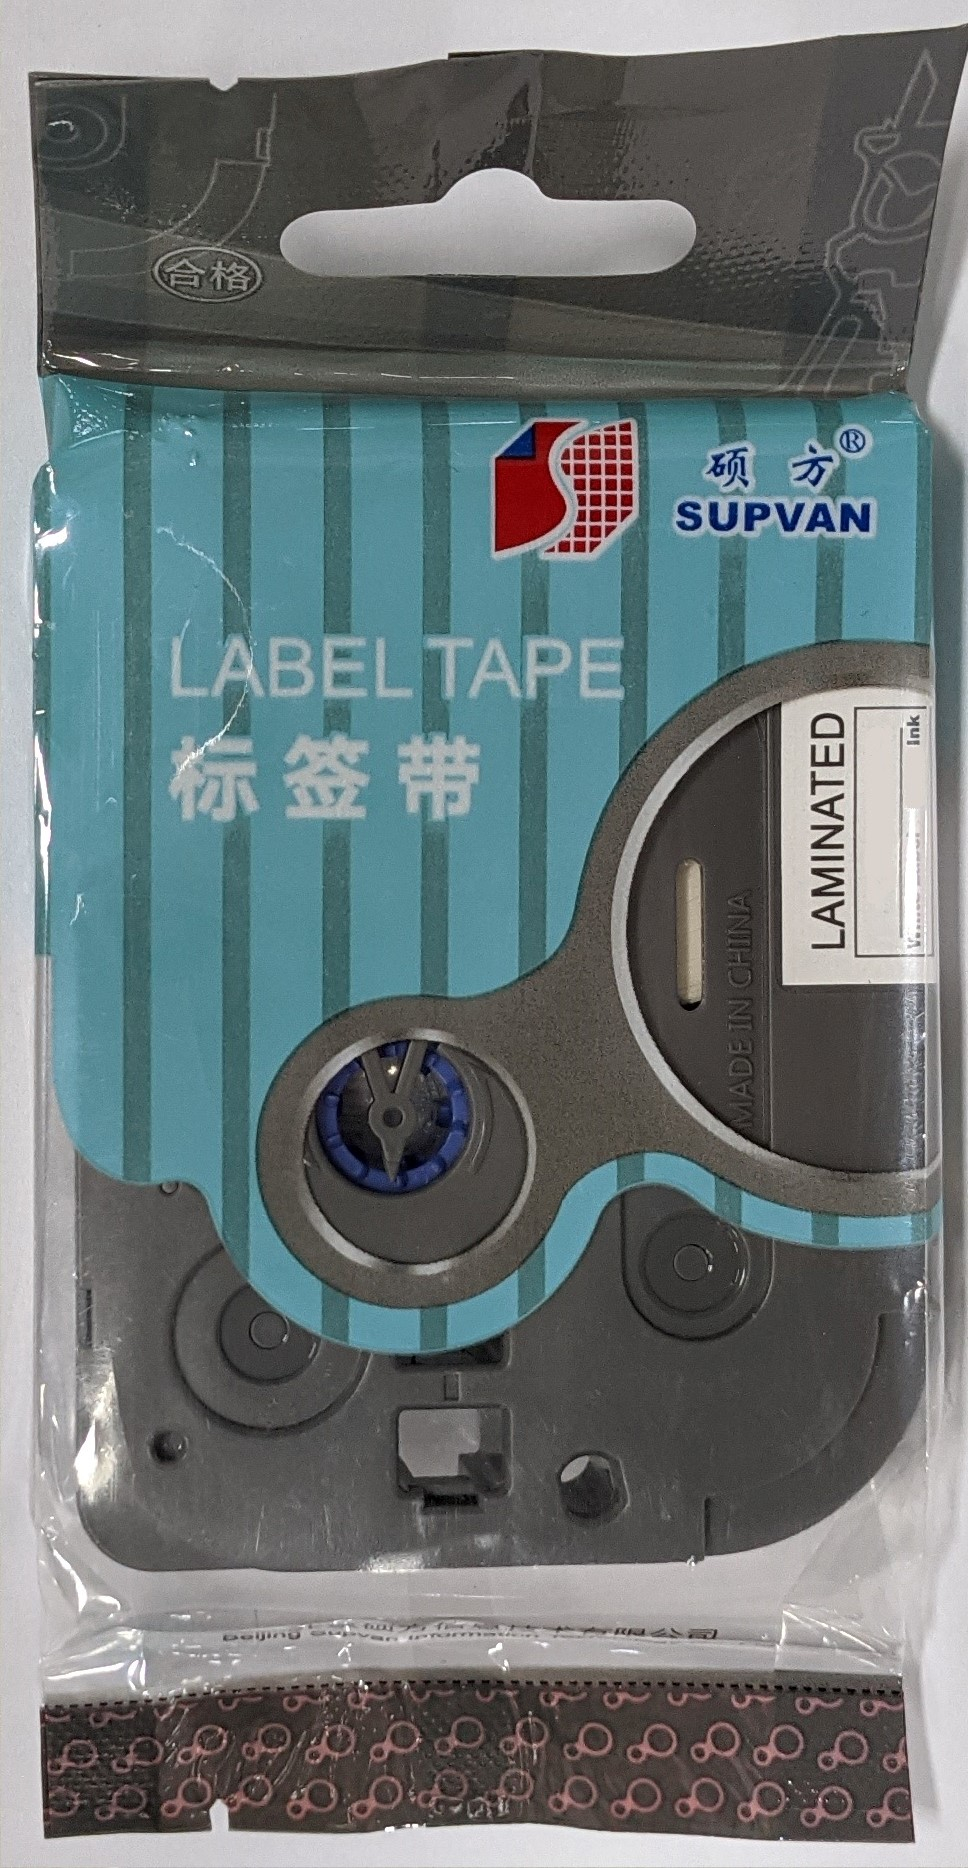 Samolepicí páska Supvan L-222E, 9mm x 8m, červený tisk / bílý podklad, laminovaná